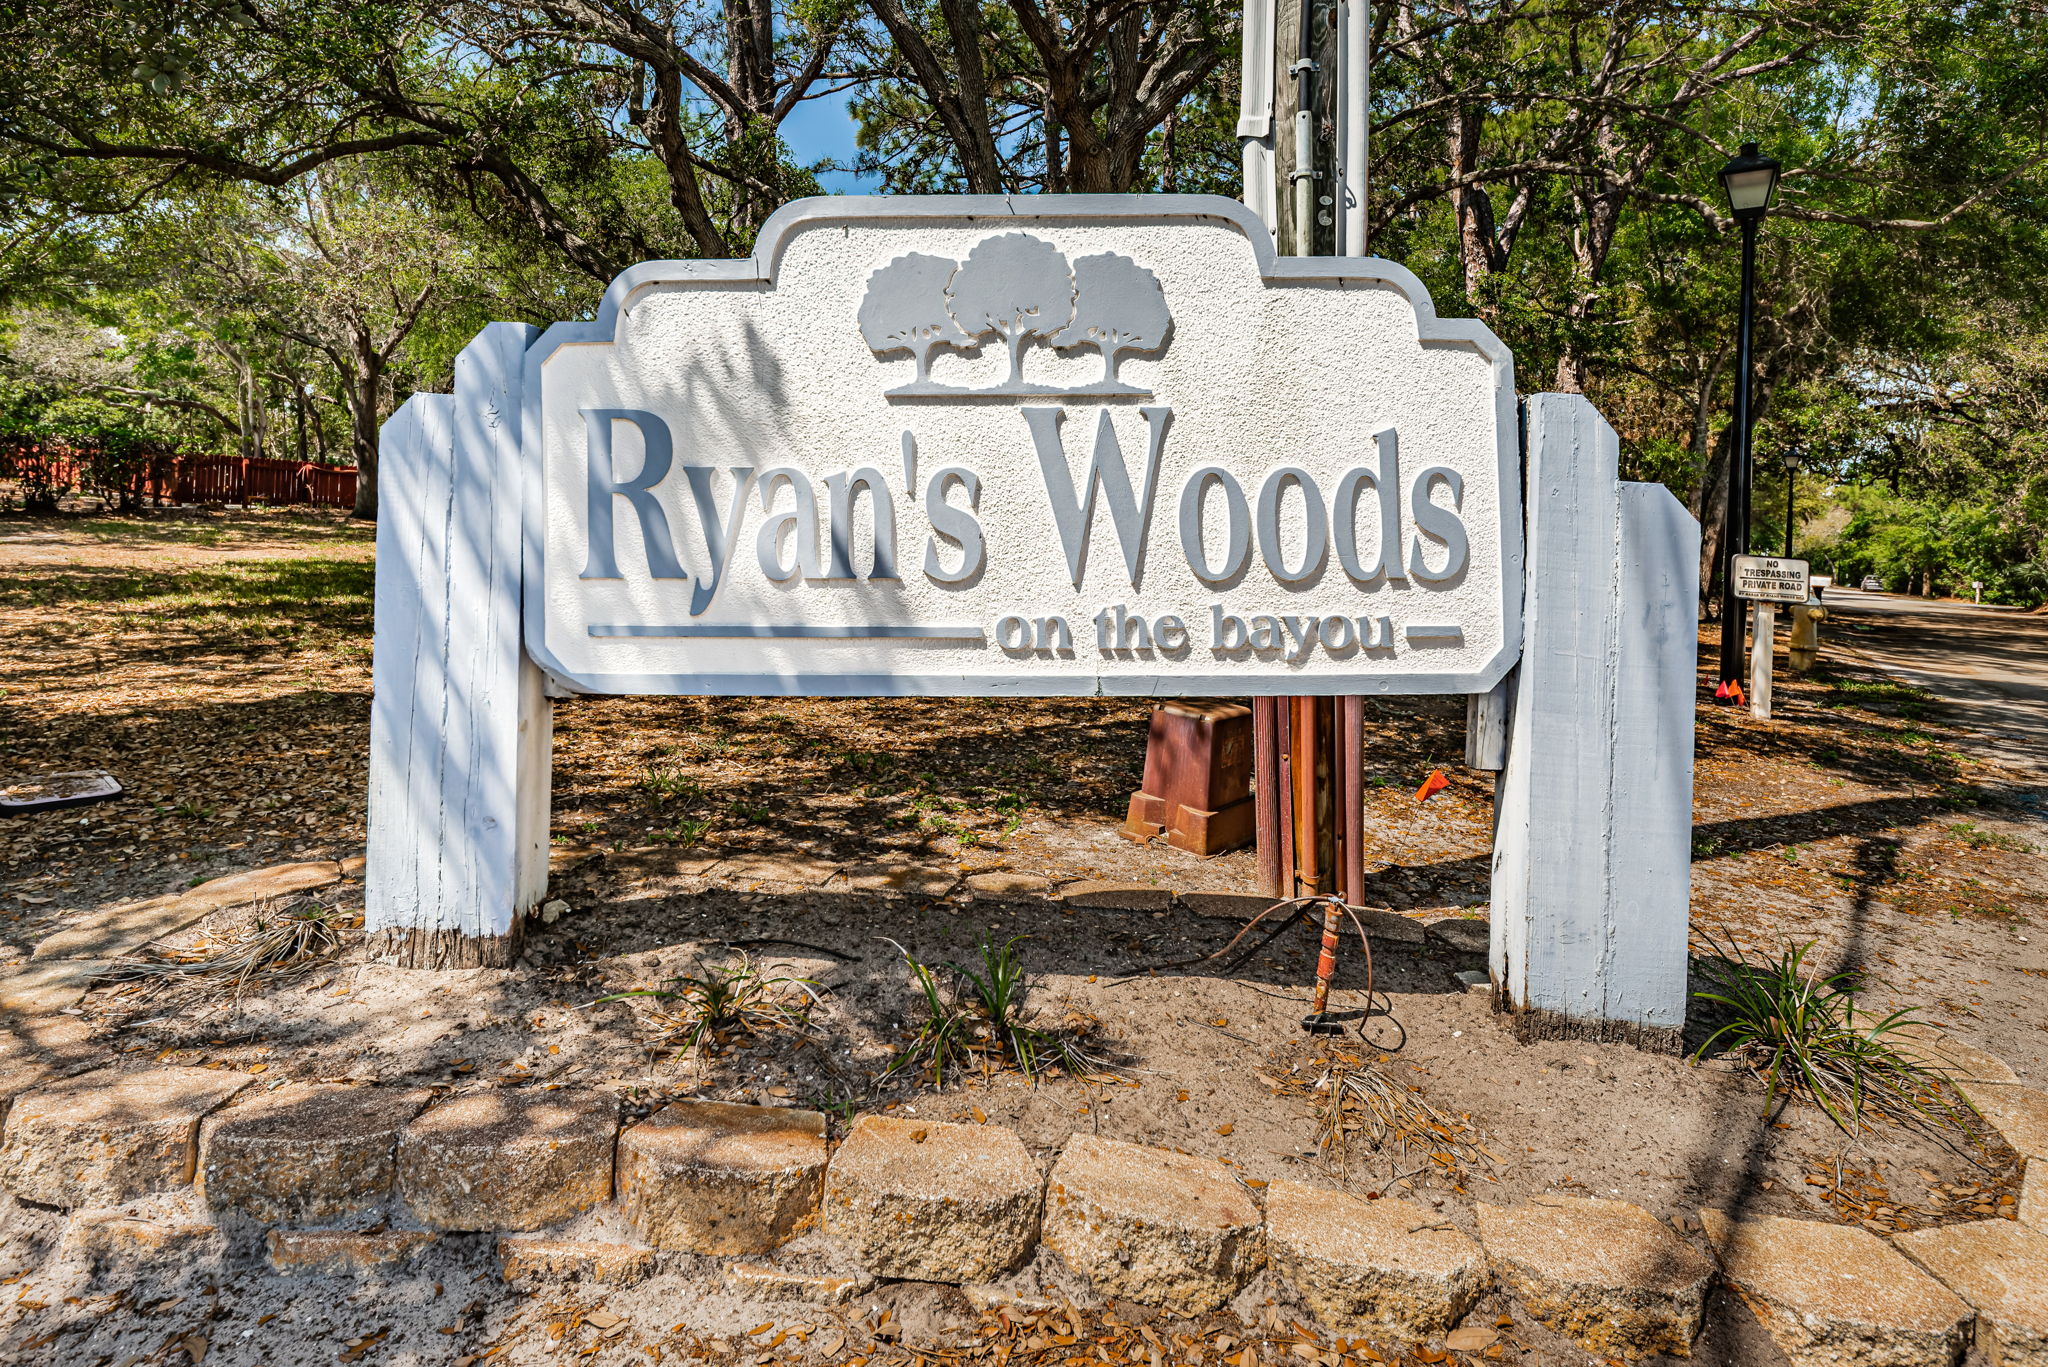 1-Ryans Woods on the Bayou